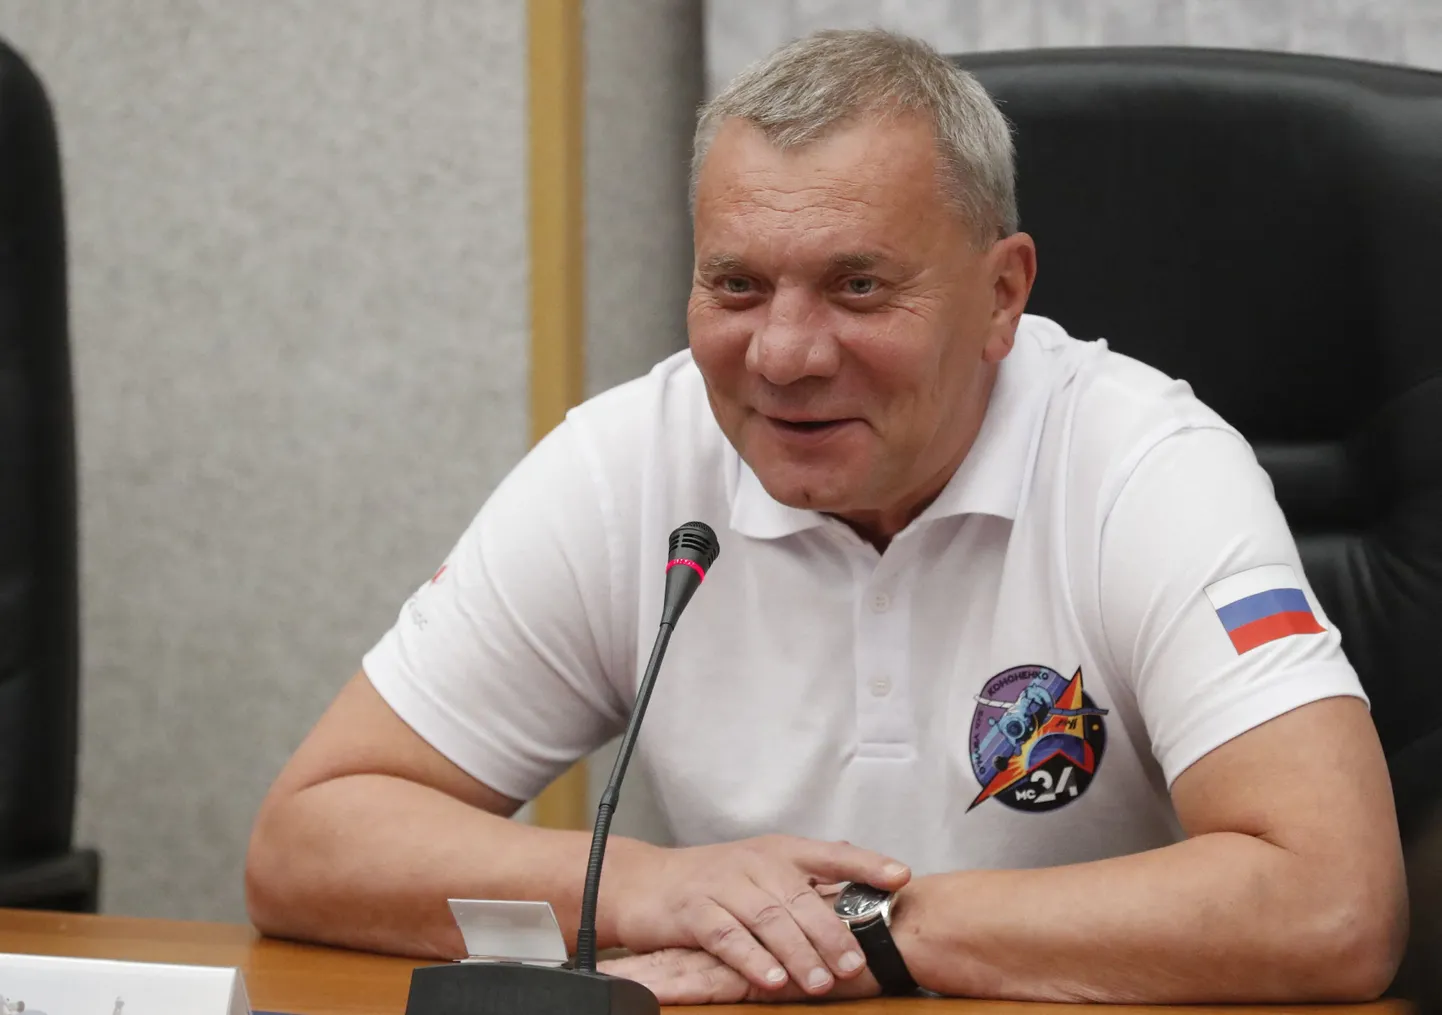 "Roskosmos" vadītājs Jurijs Borisovs